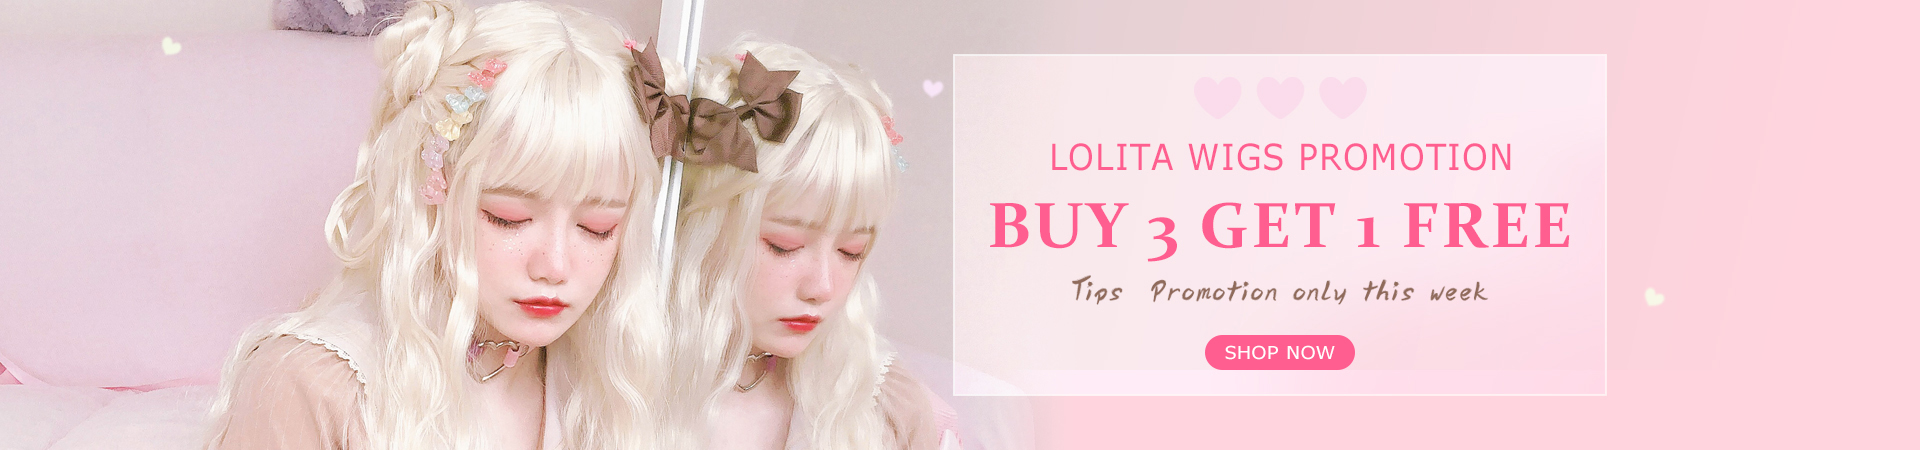 Lolita Wigs Buy 3 Get 1 Free